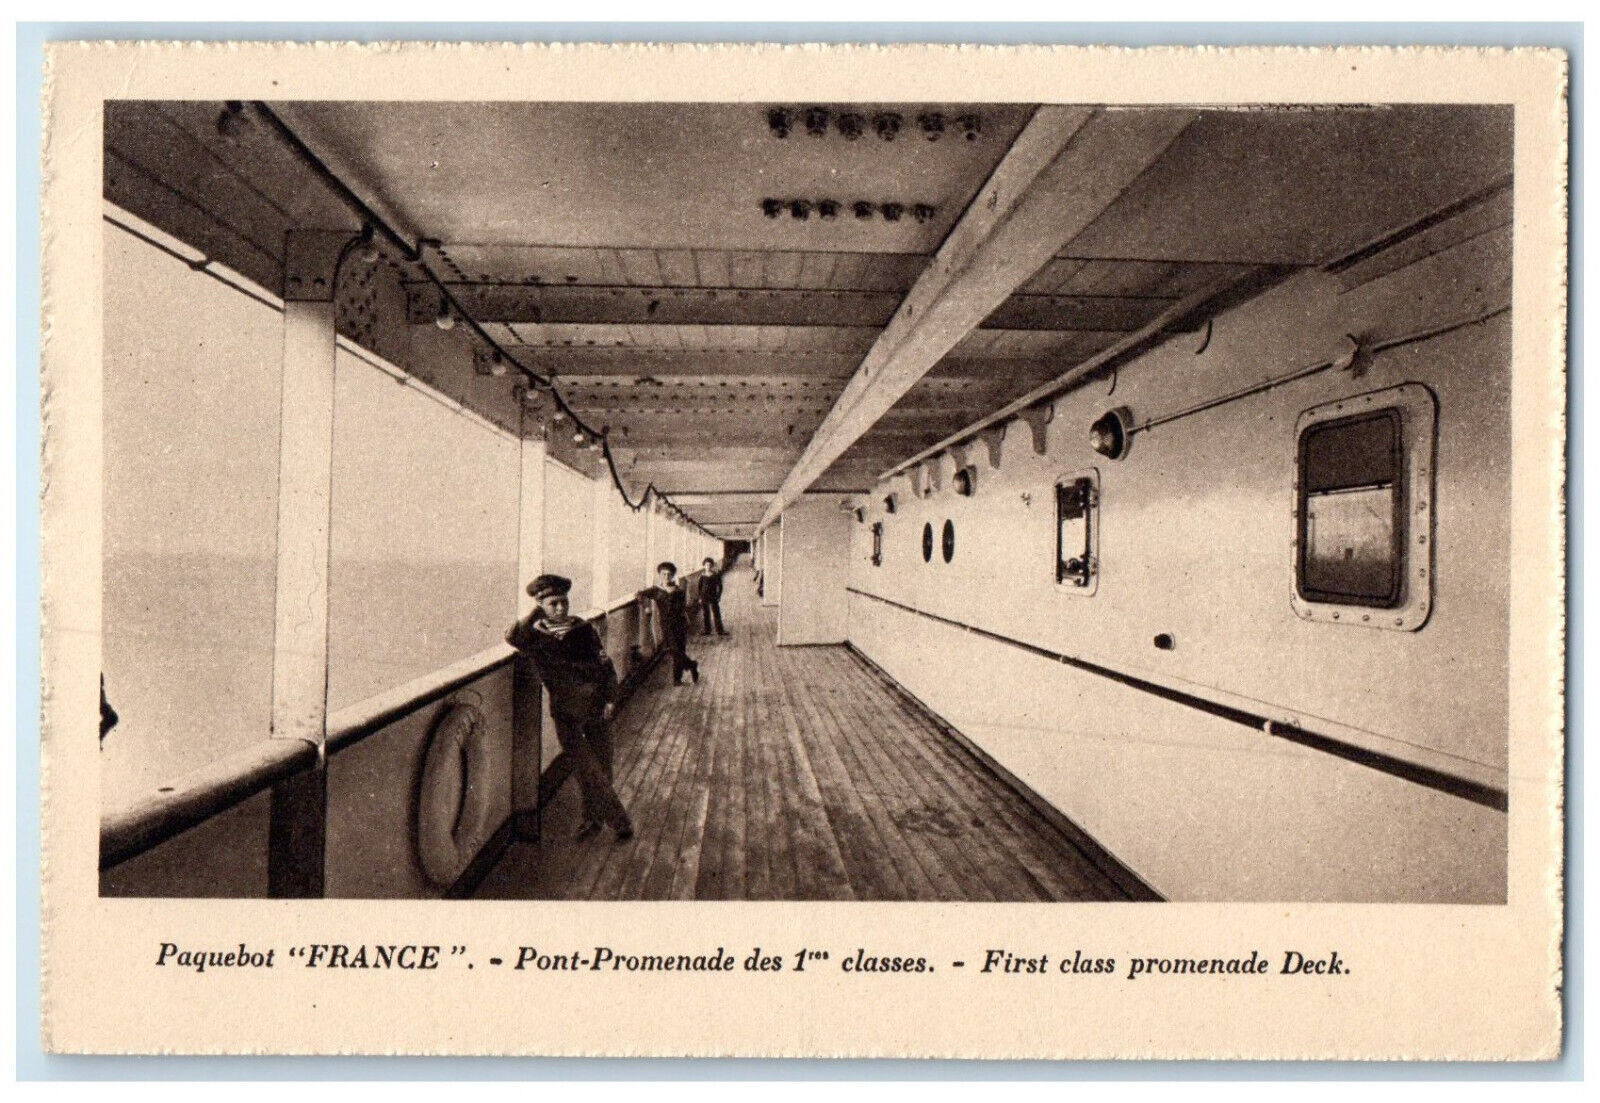 c1940's Paquebot France First Class Promenade Deck Unposted Vintage Postcard